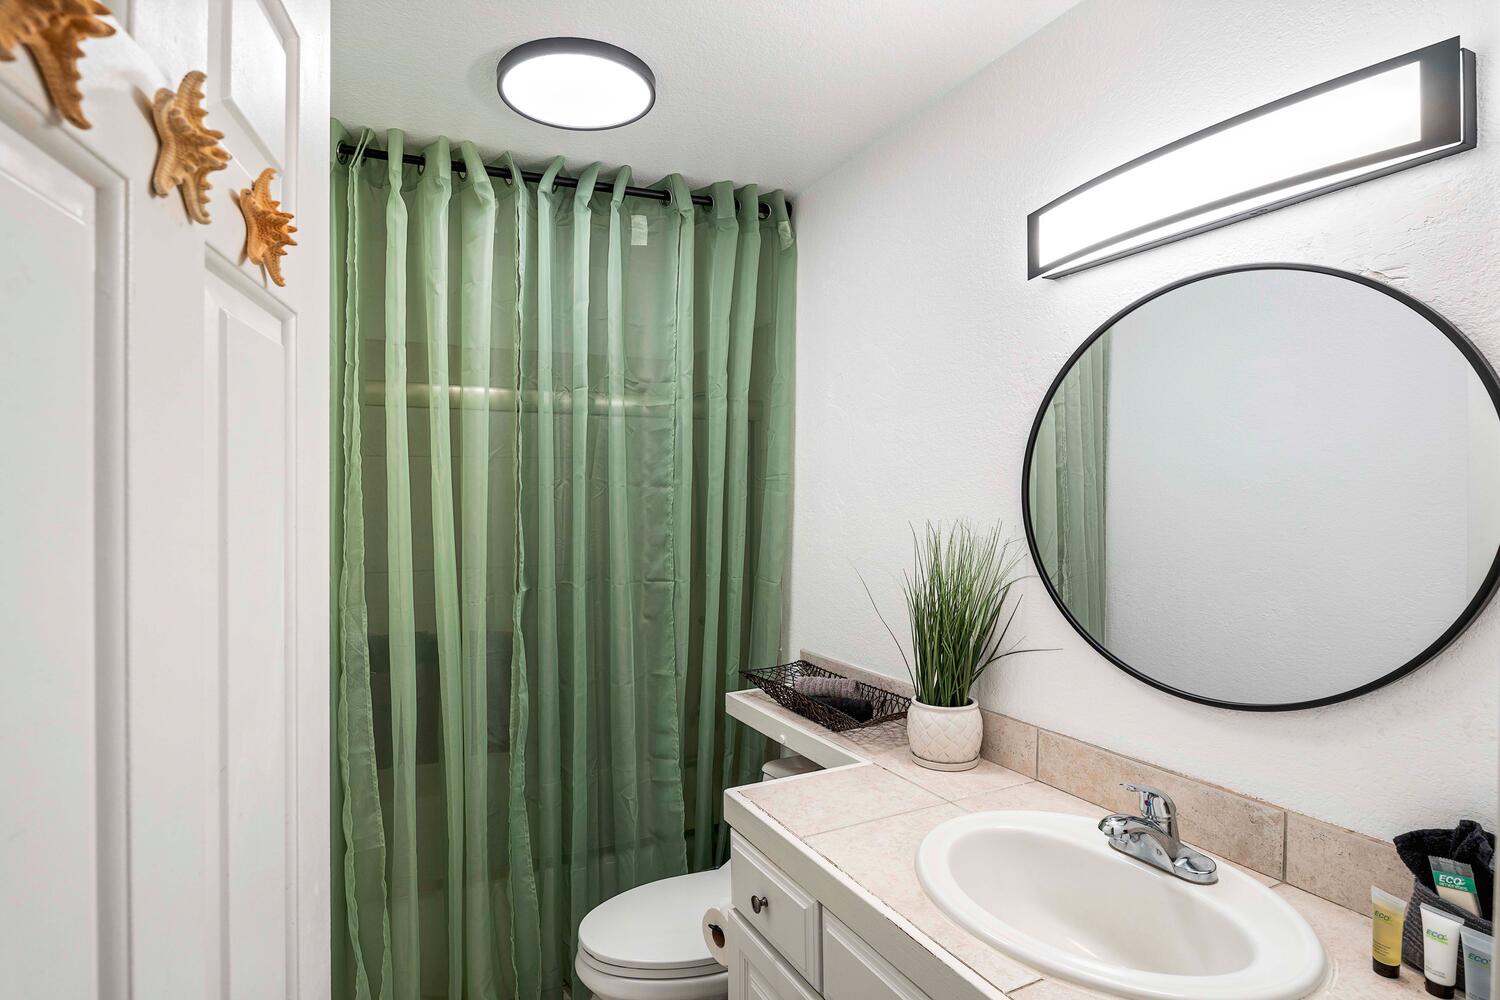 Kailua Kona Vacation Rentals, Kona Reef F23 - Full bathroom with shower/tub combo and ample vanity space.